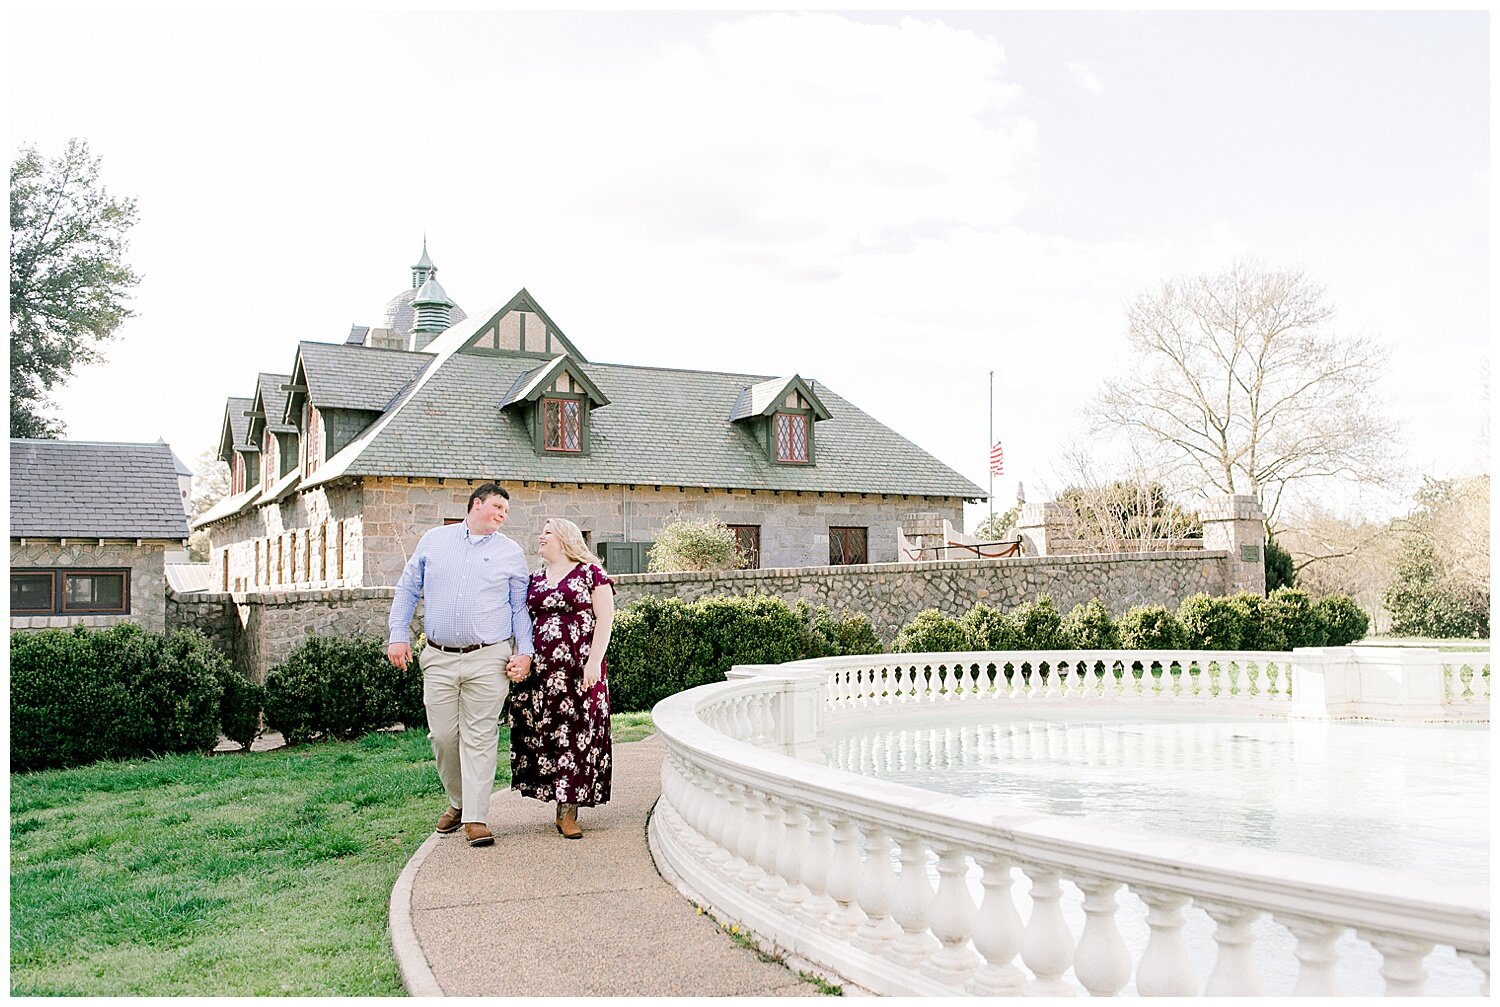 Spring Maymont Park Engagement Session | Richmond VA Wedding Photographer